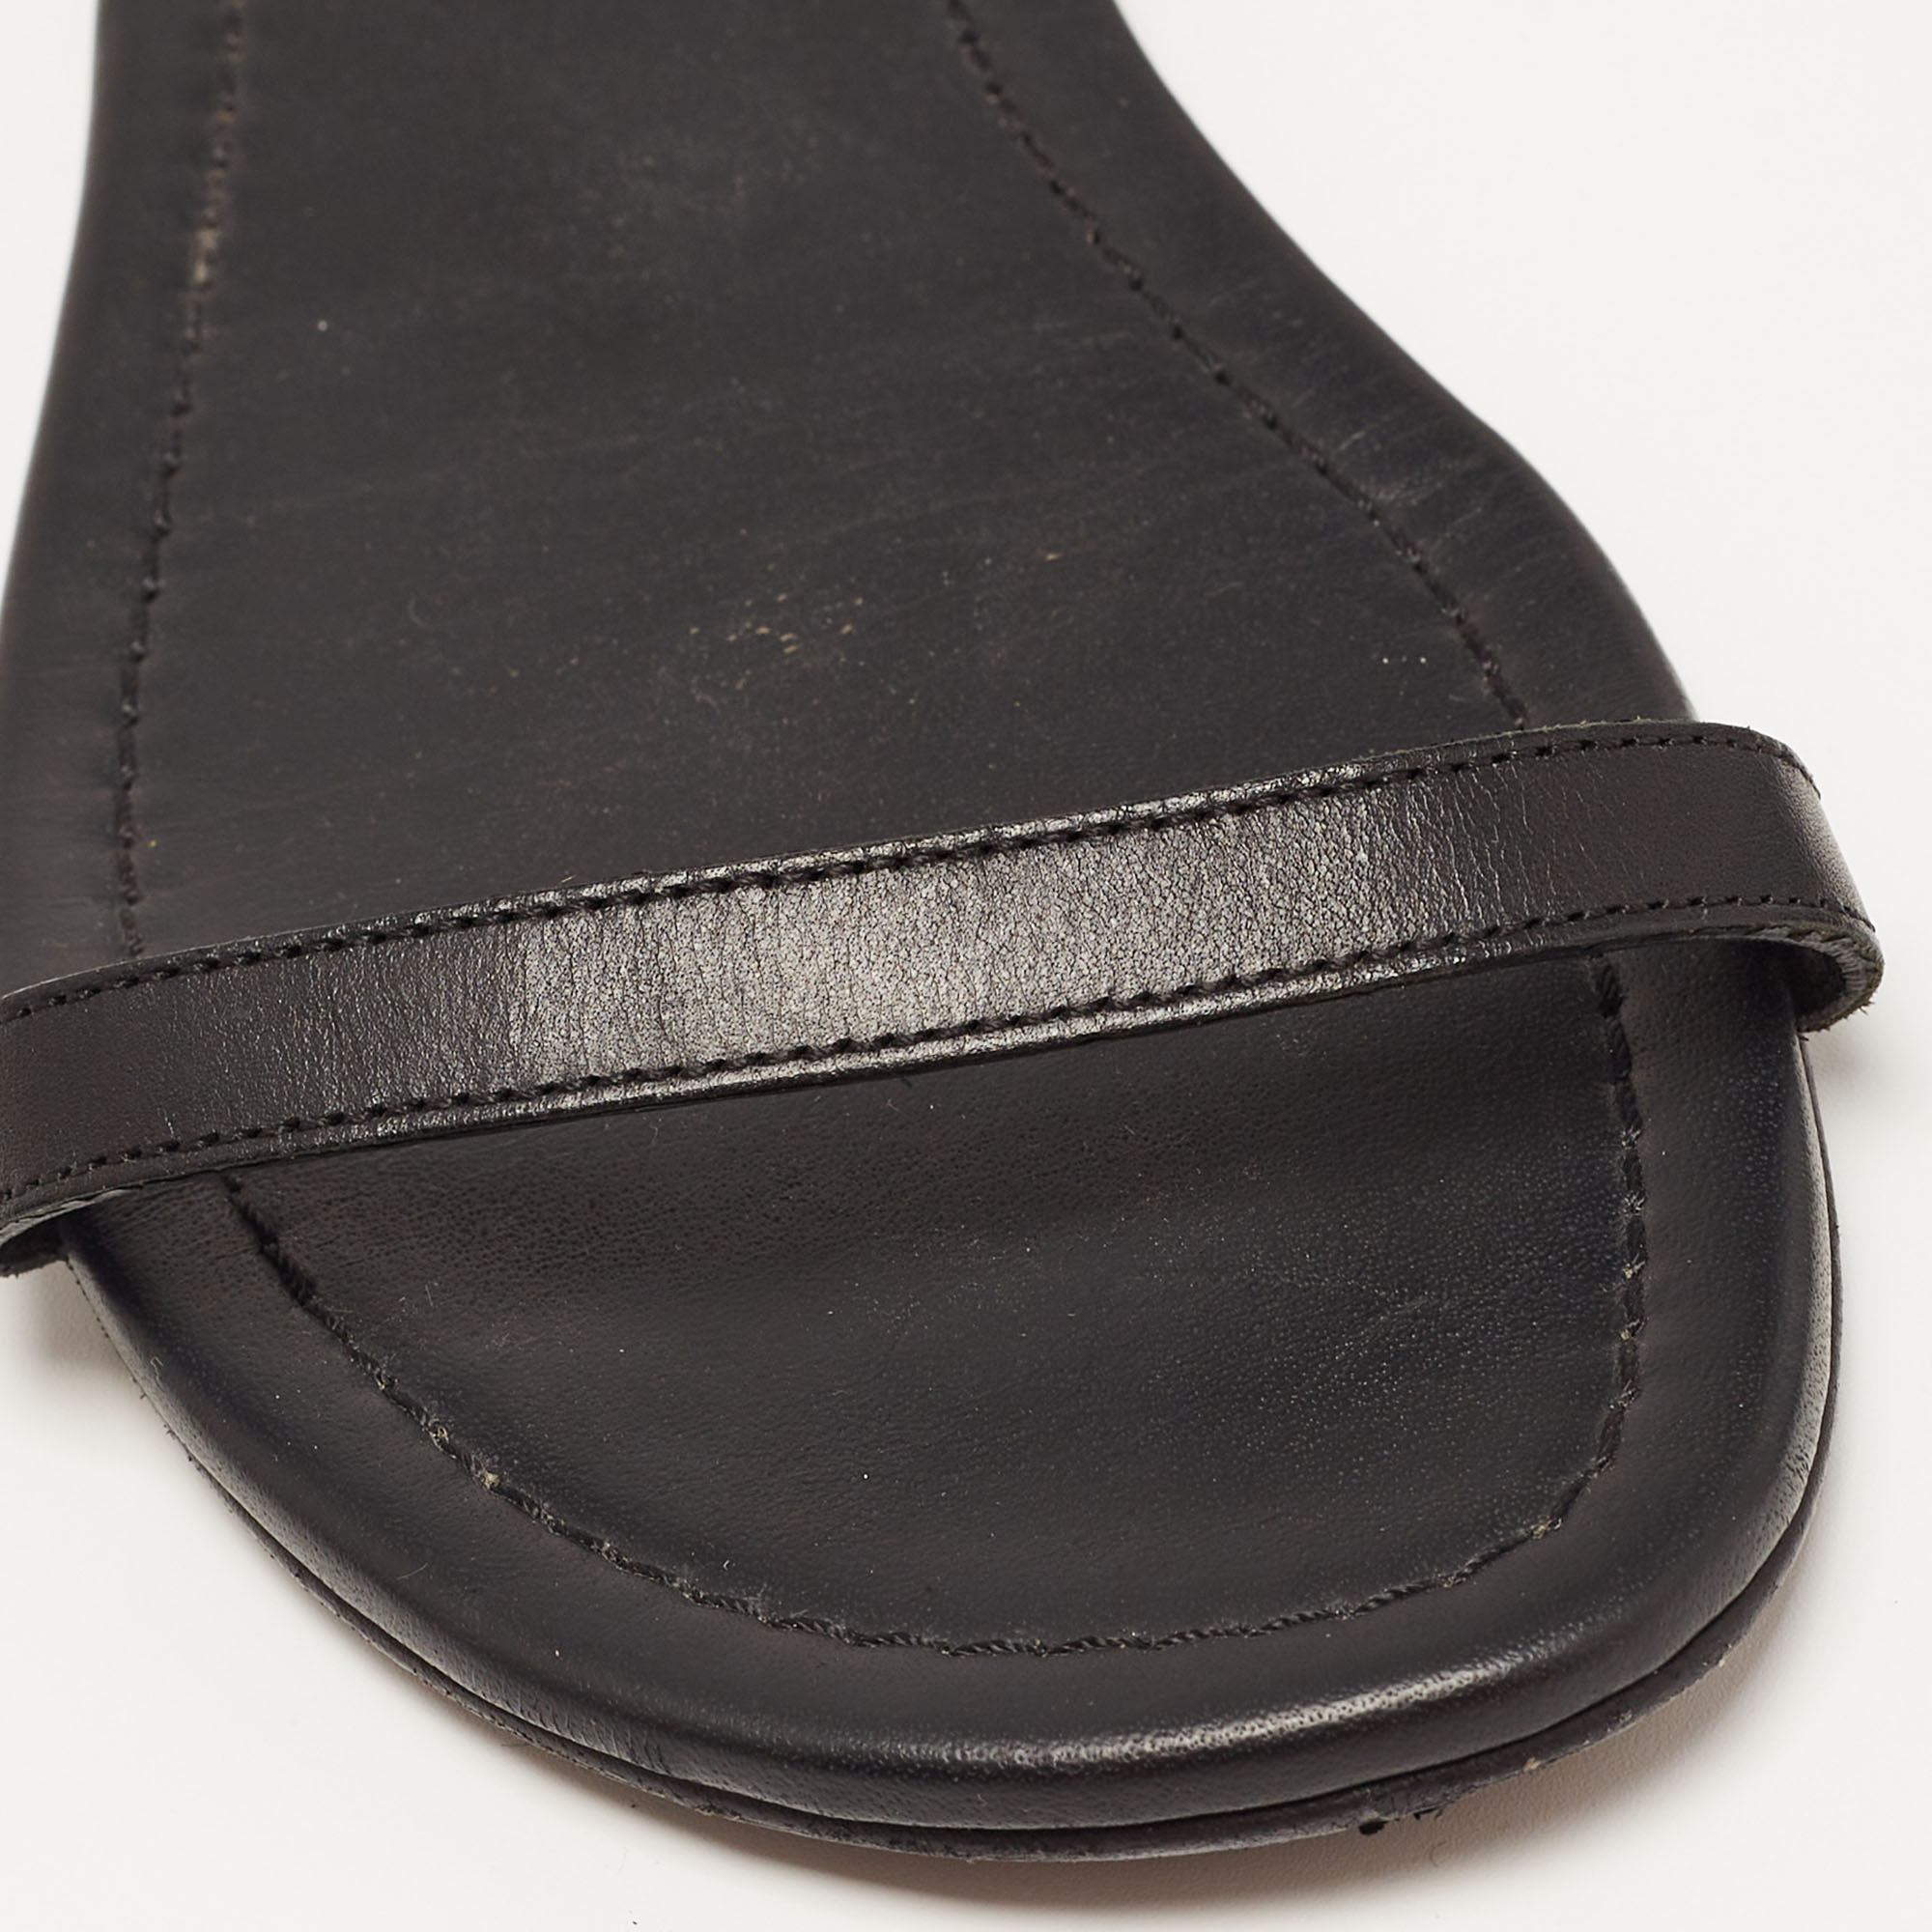 Saint Laurent Black Leather Studded Ankle Cuff Flat Sandals Size 36